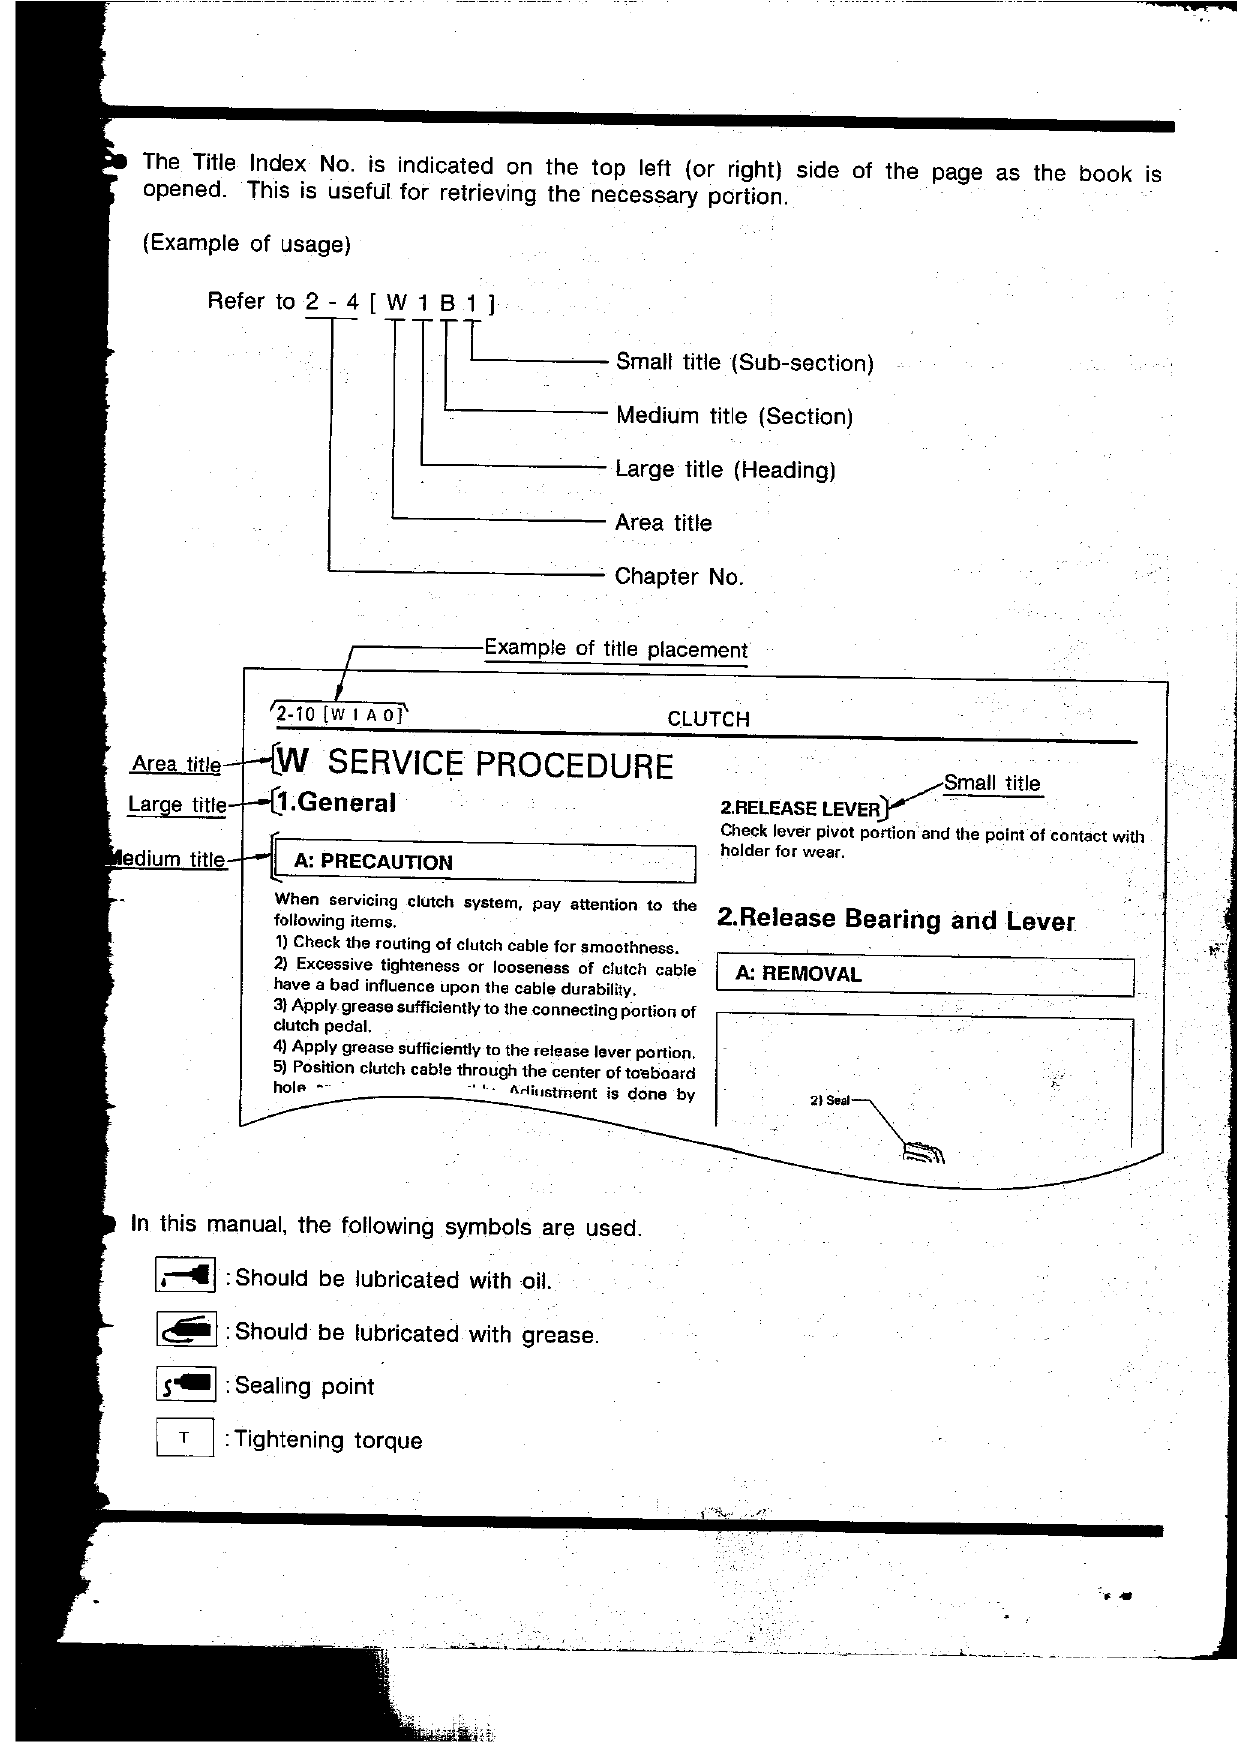 1992 Subaru Legacy service manual Preview image 4